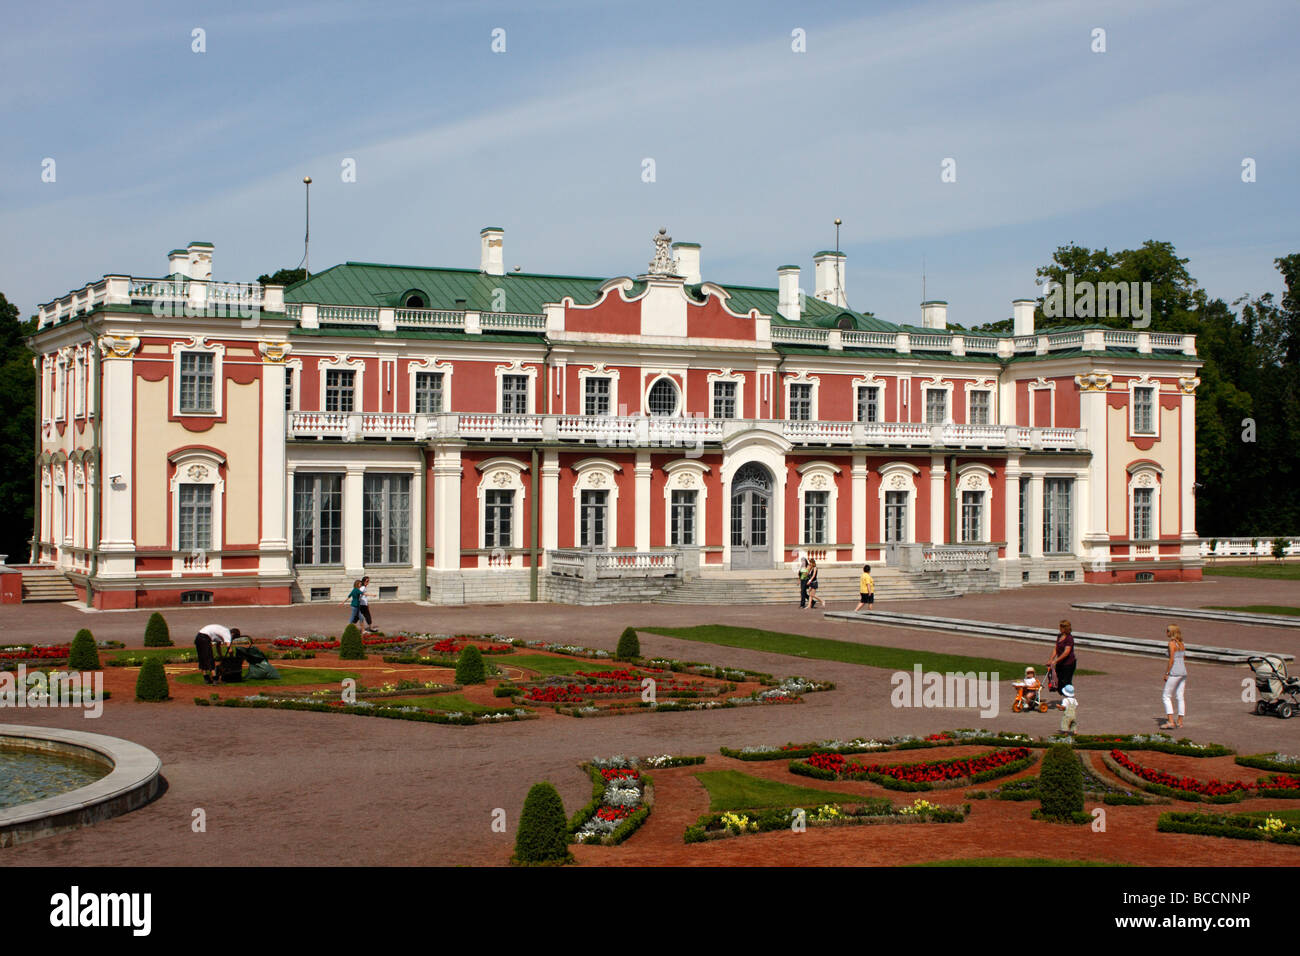 Kadriorg Palace and Gardens in Tallinn, Estonia Stock Photo